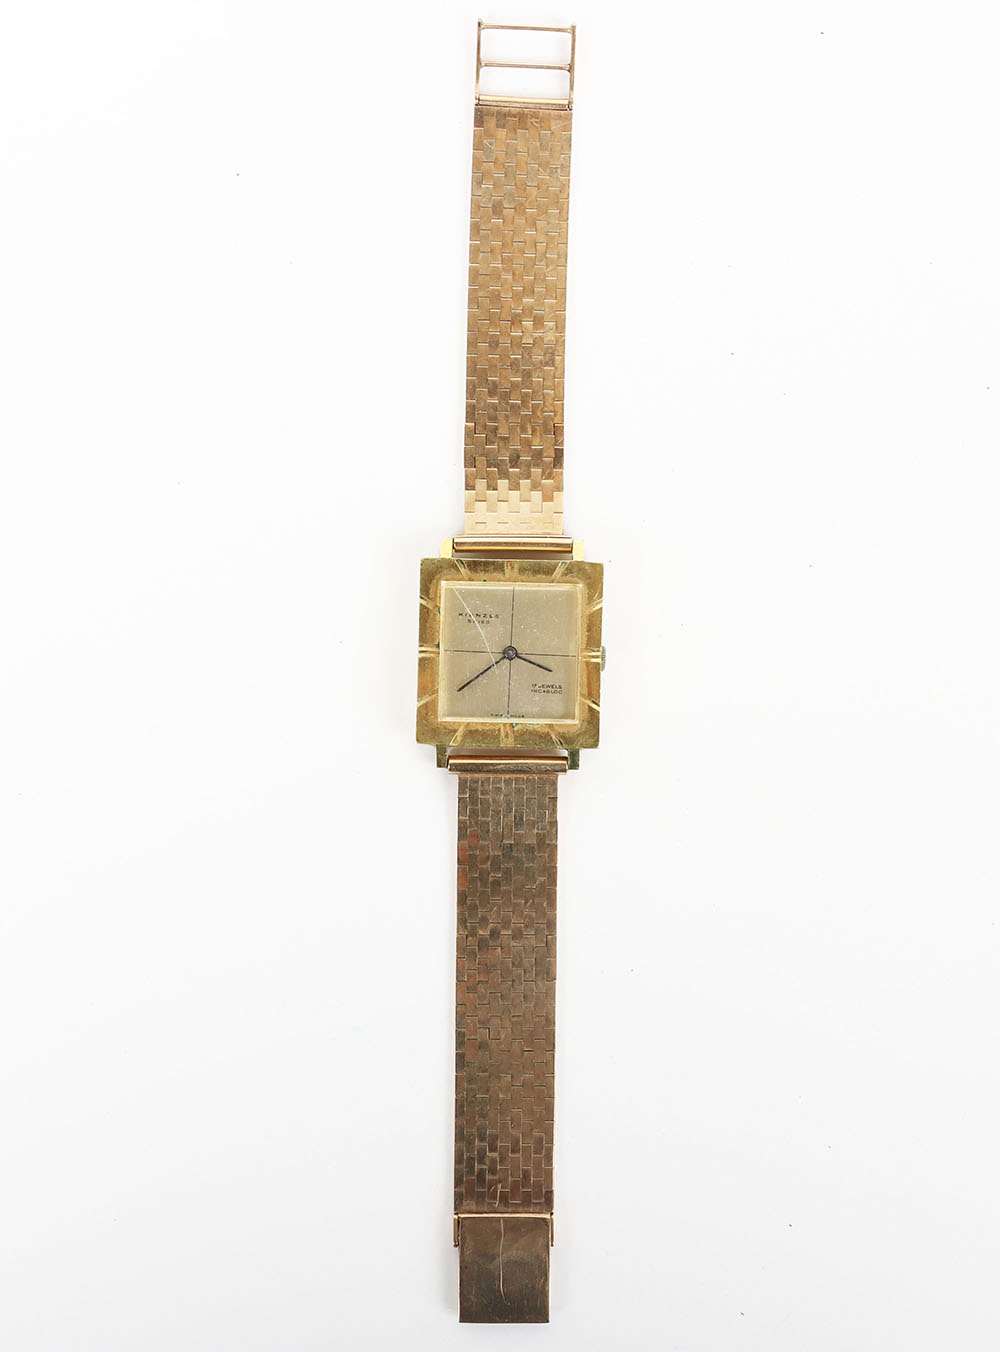 A Kienzle wristwatch, on 9ct gold bracelet - Image 2 of 5